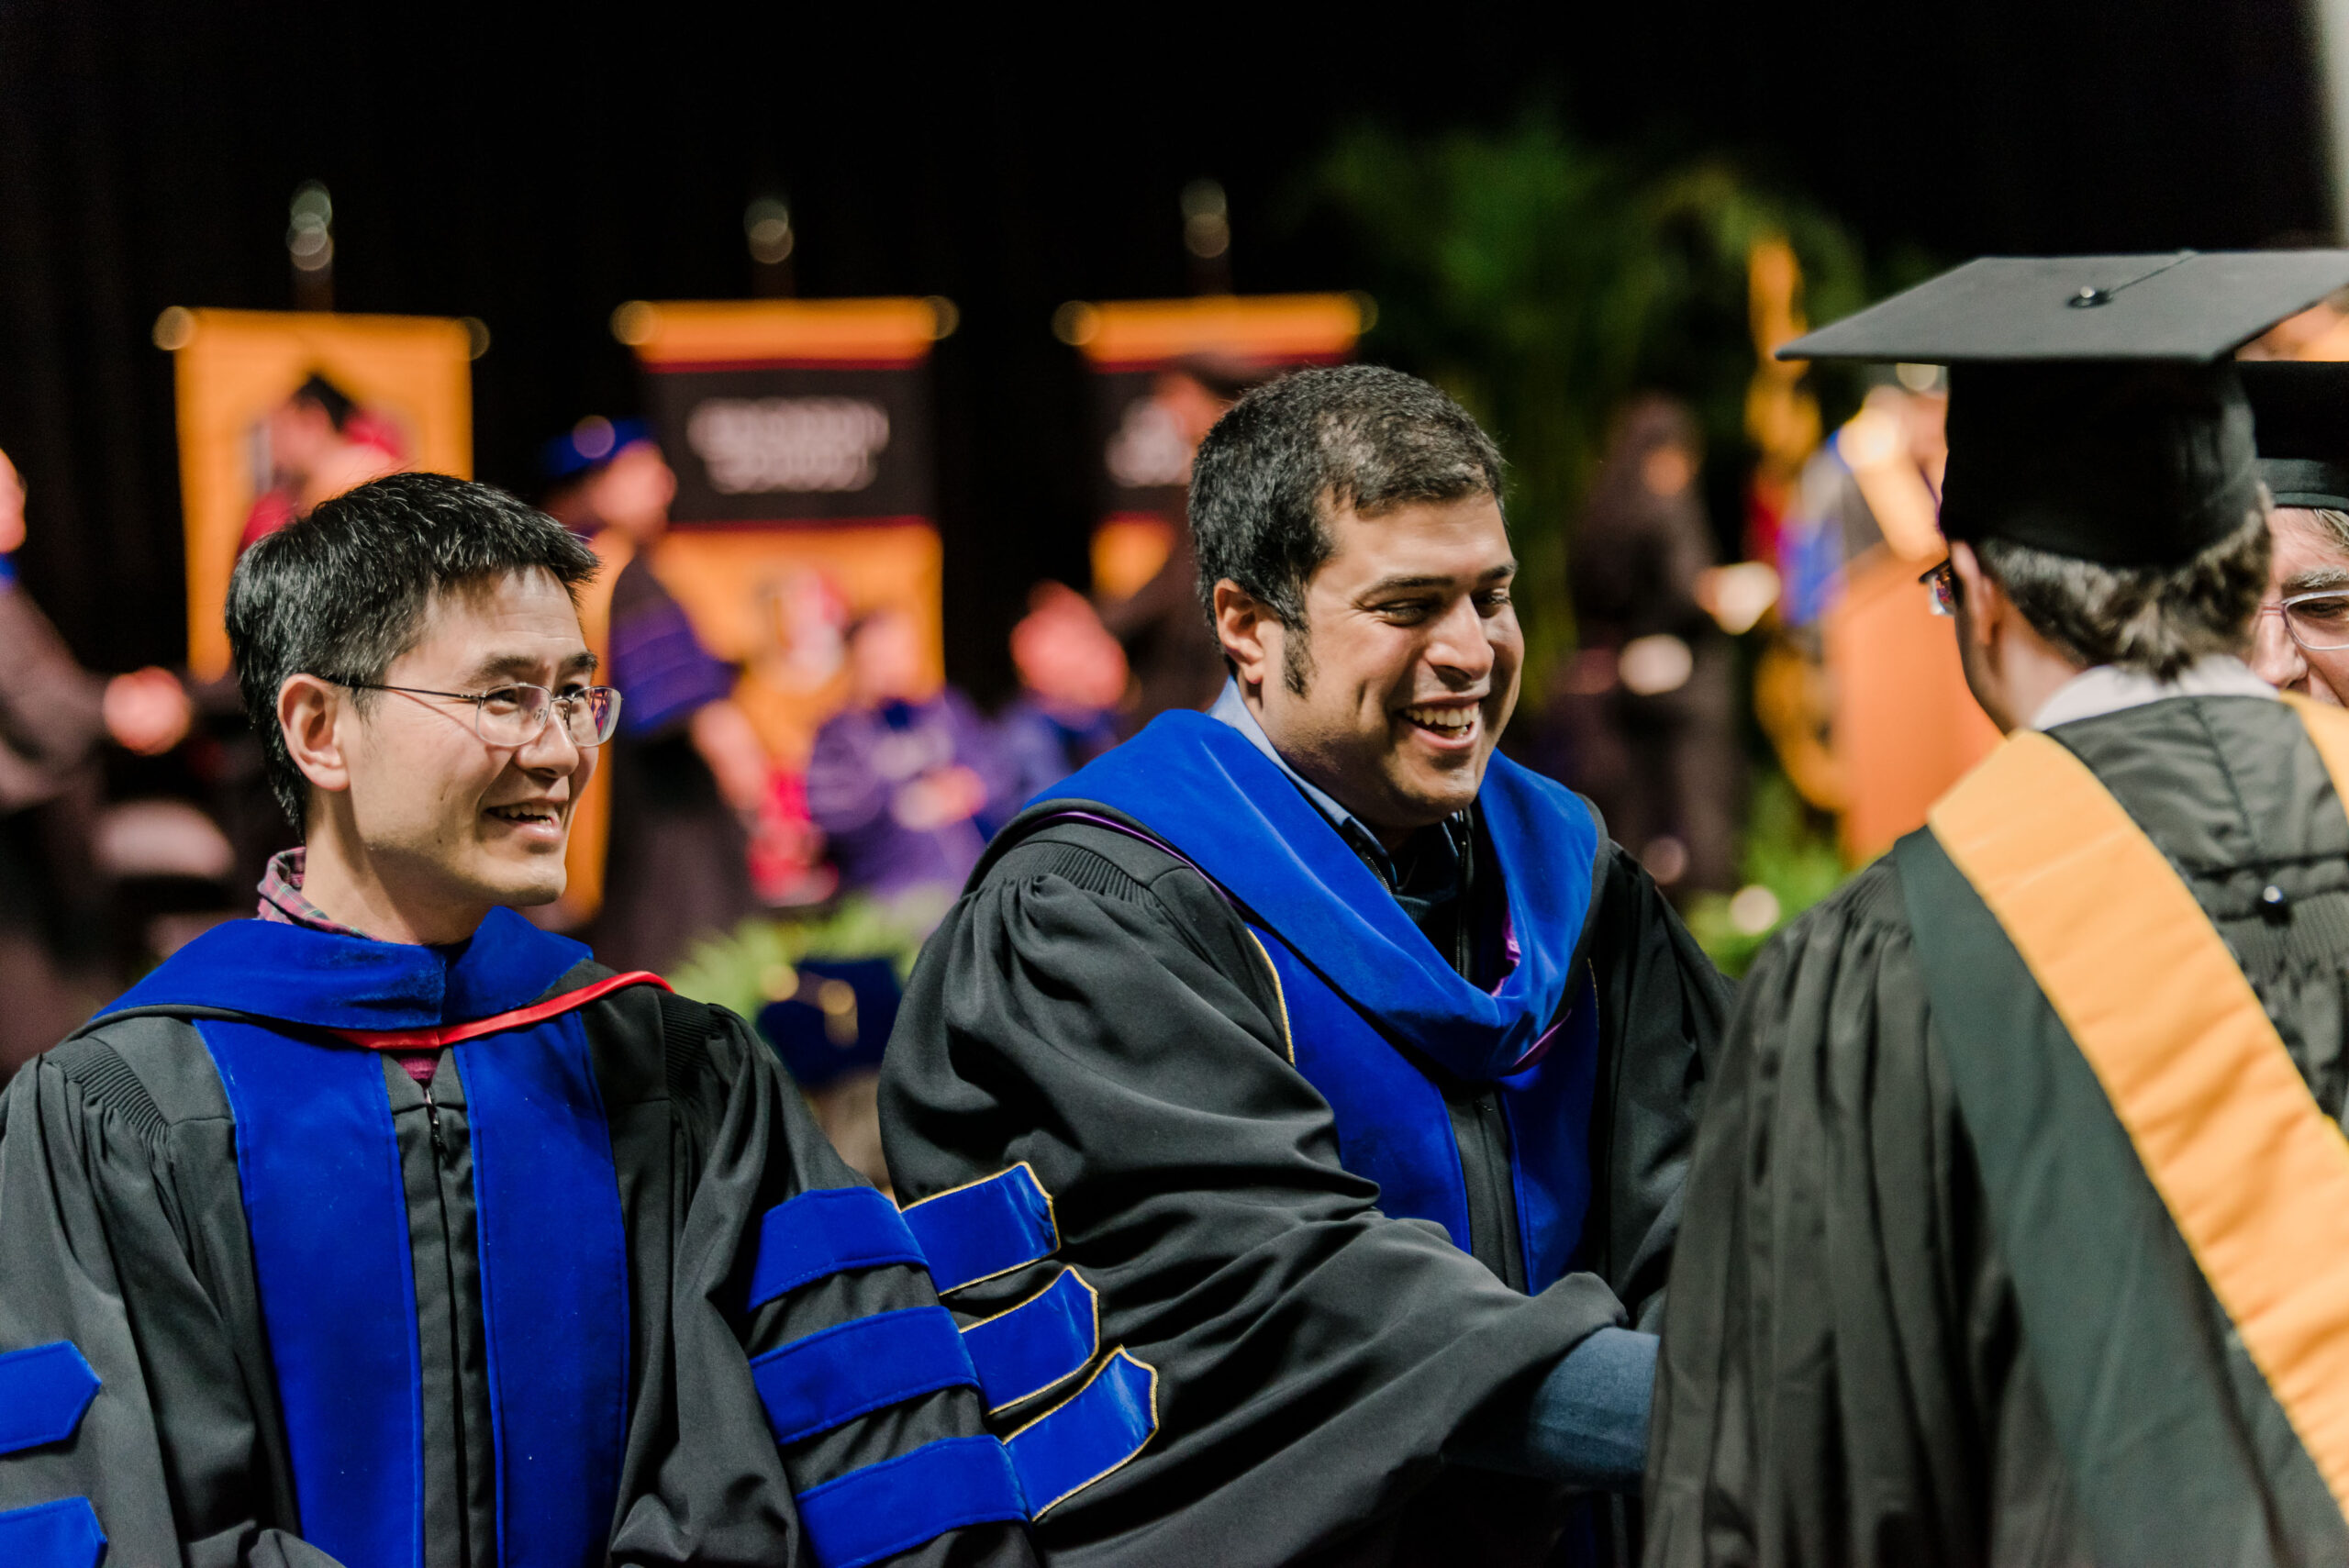 professors in graduation garb interact